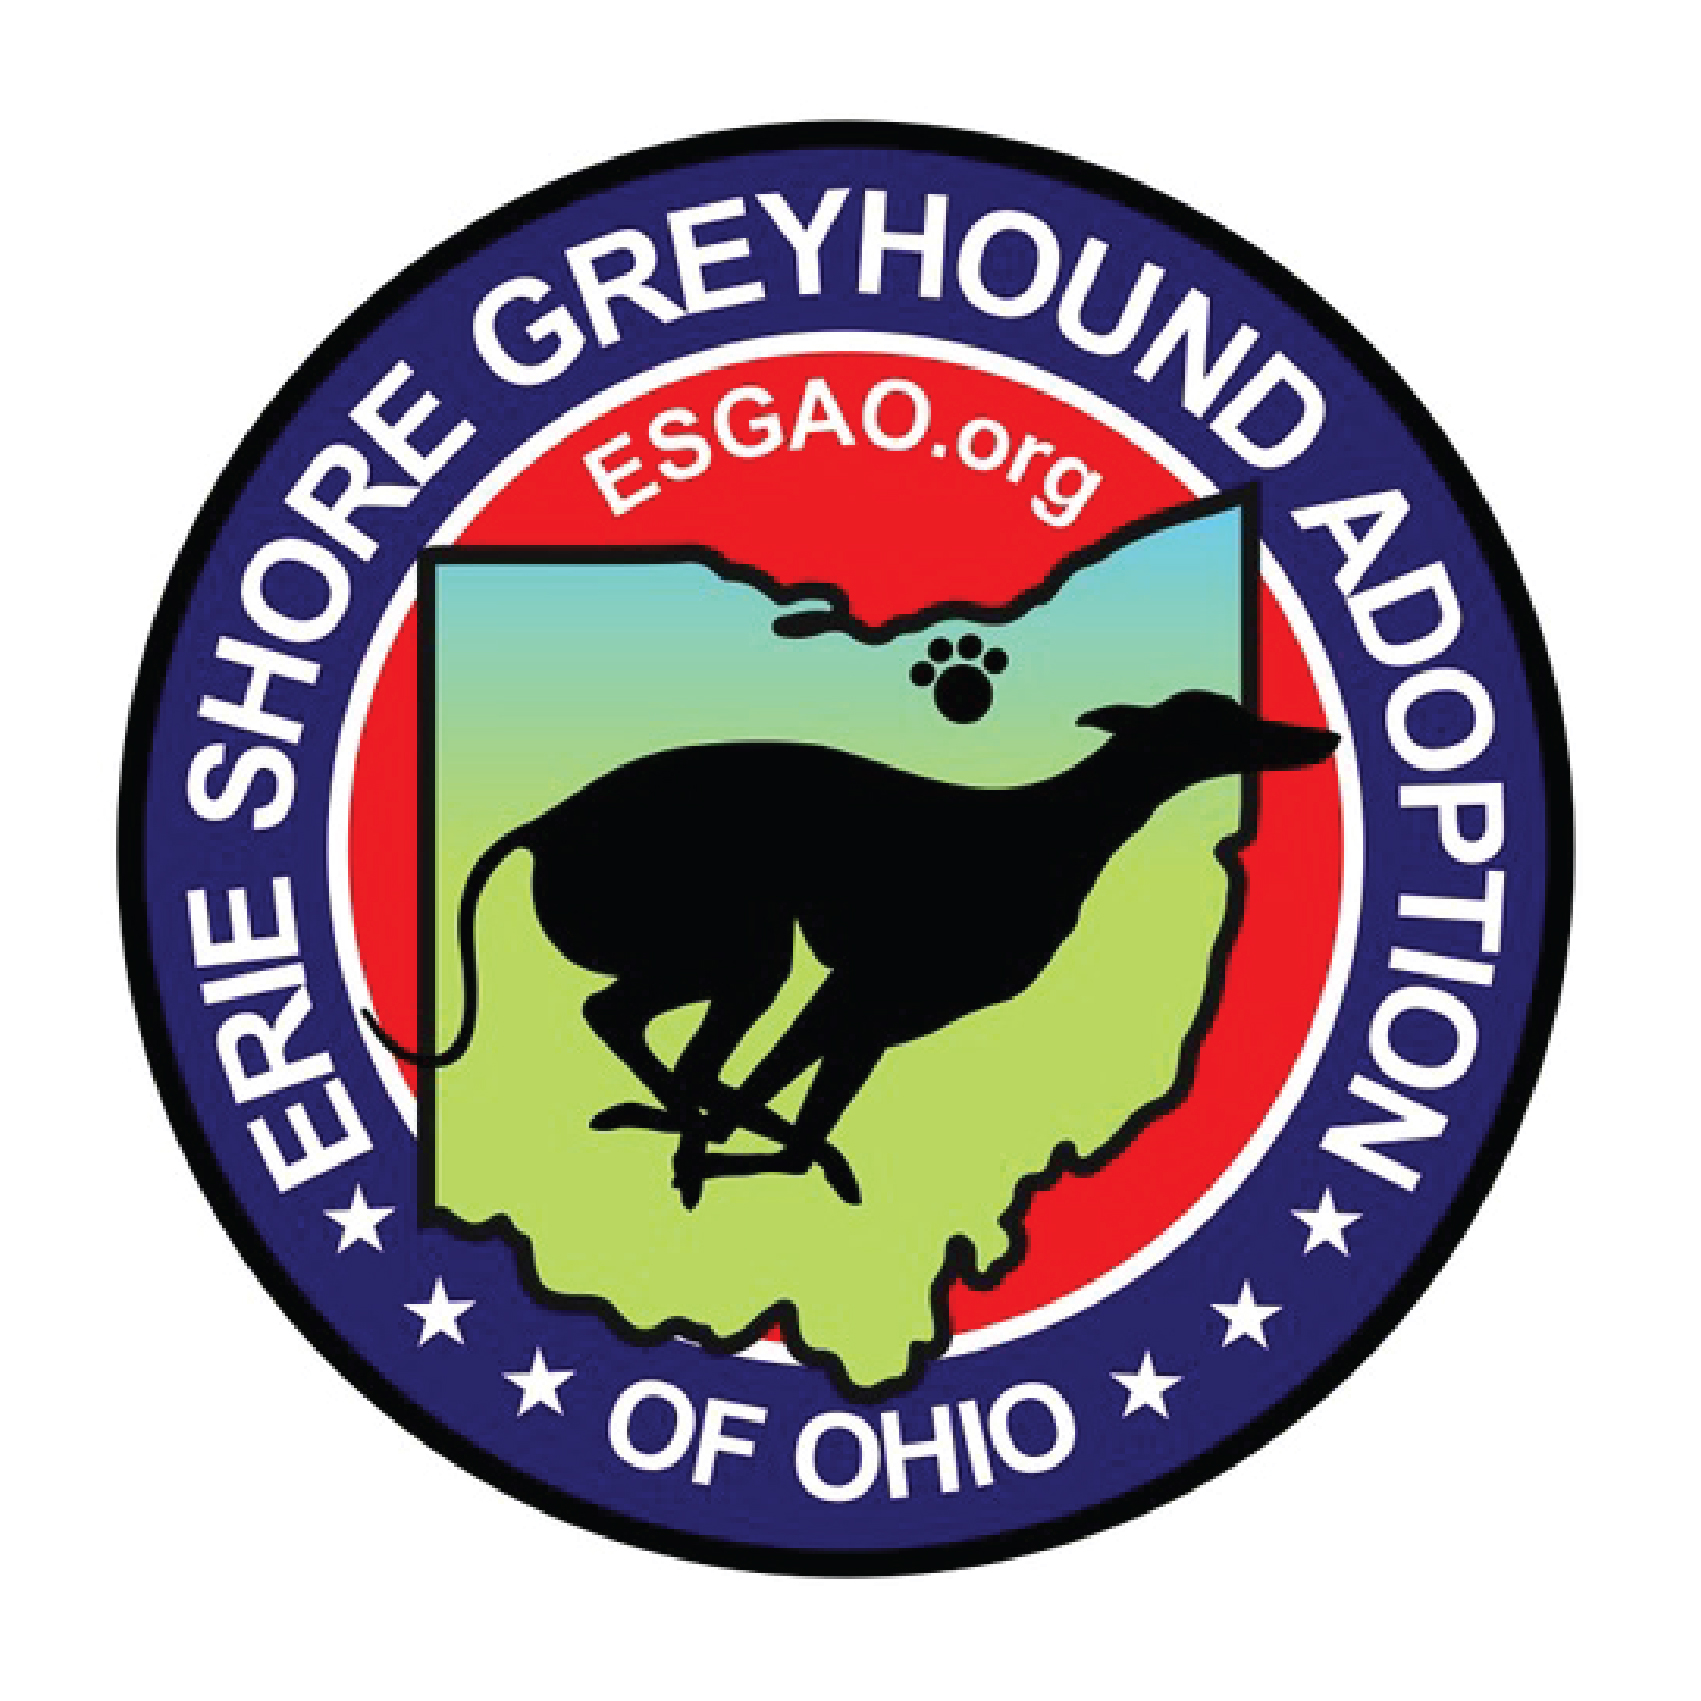 Erie Shore Greyhound Adoption of Ohio Hertvik Insurance Group Medina